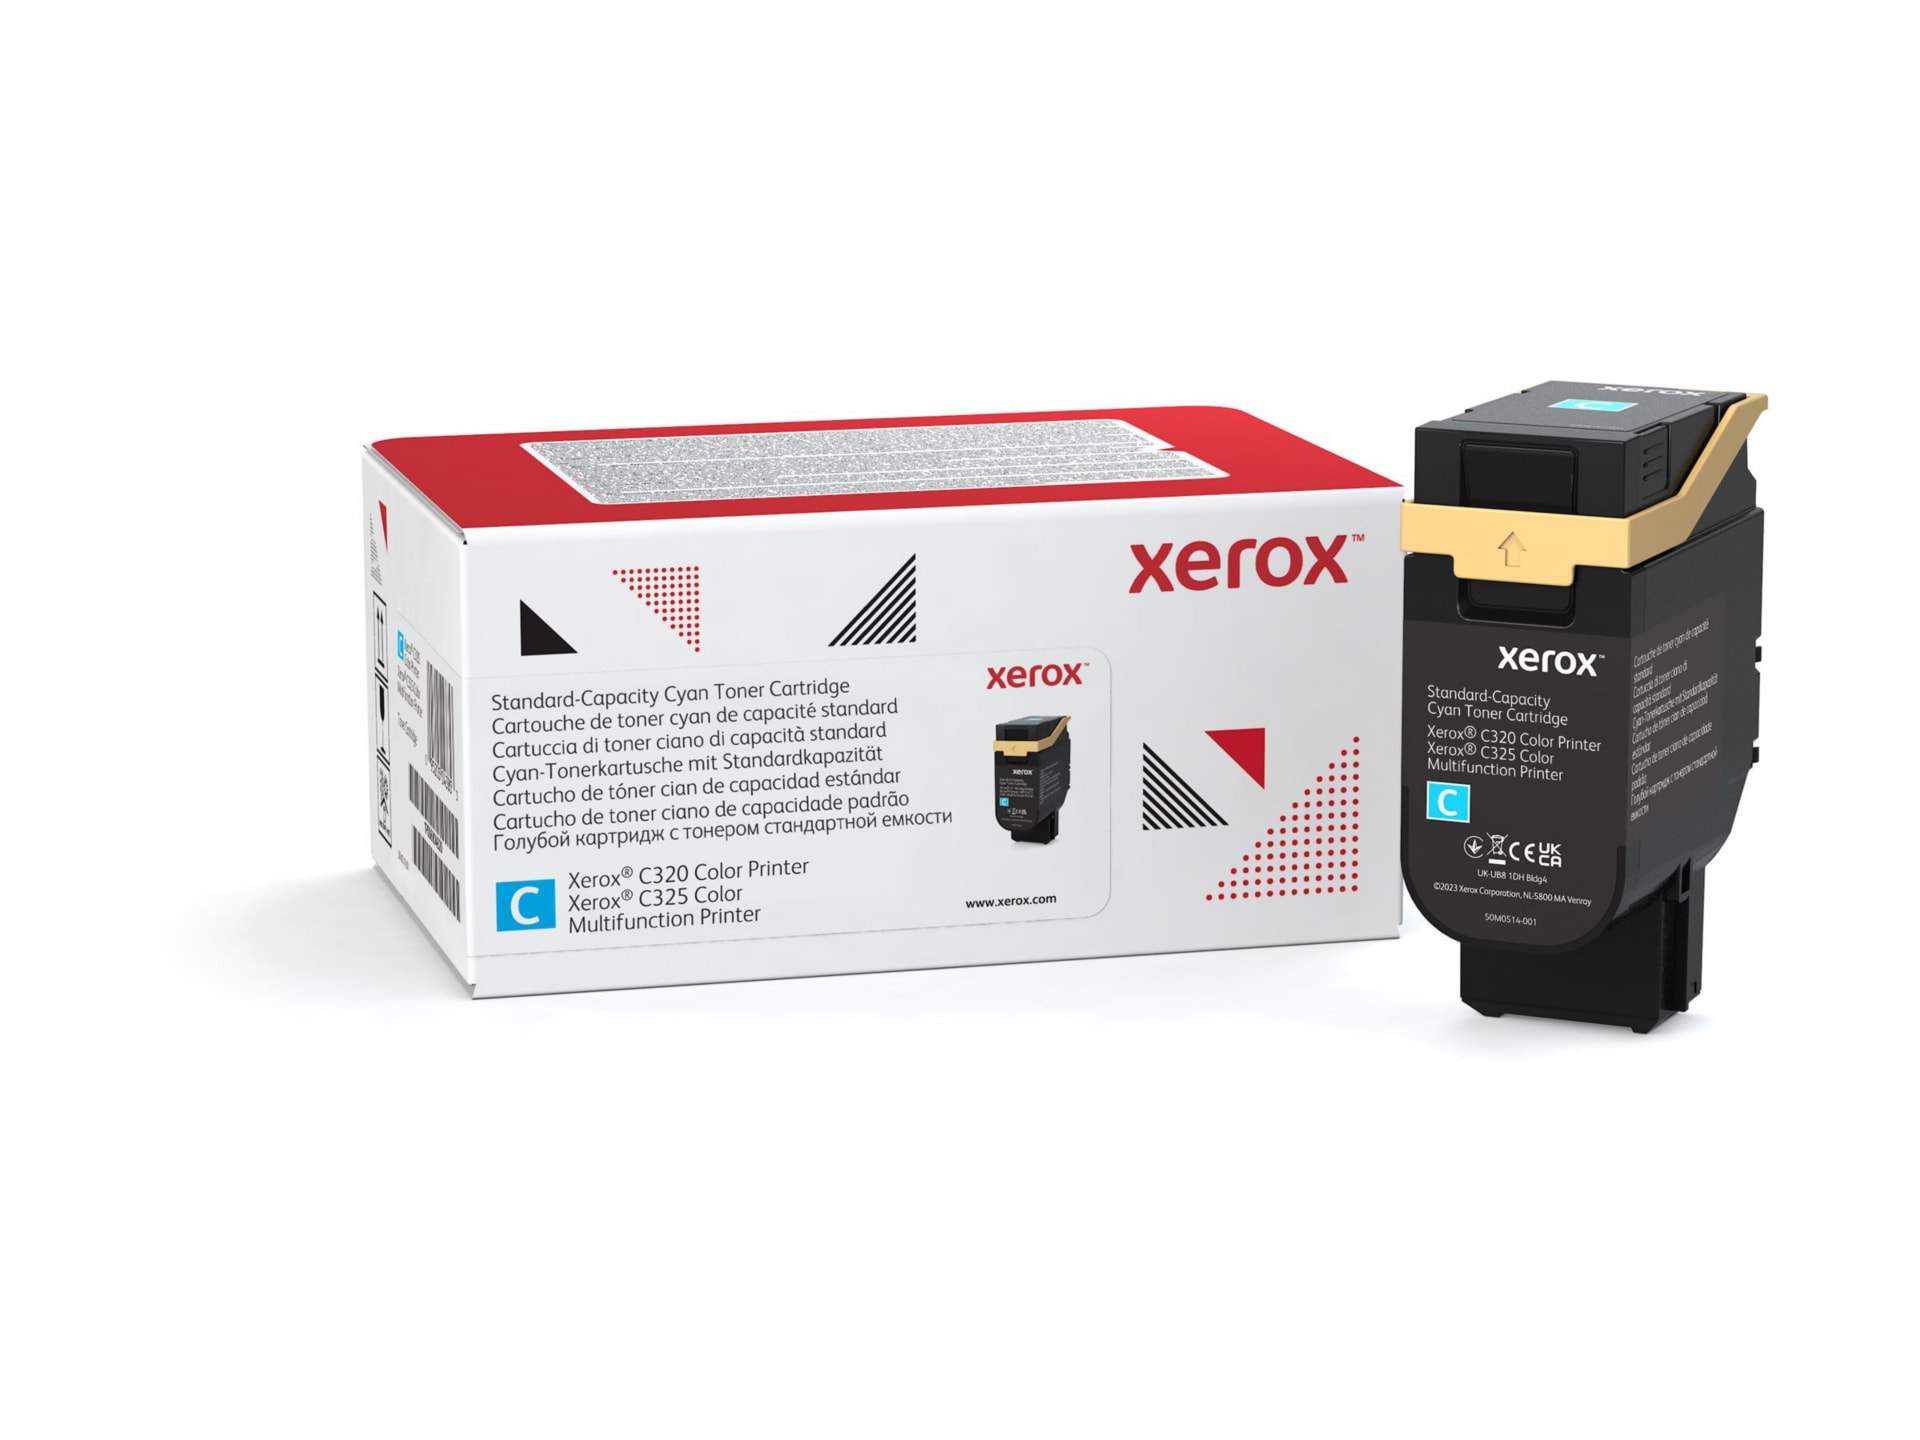 Xerox - cyan - original - toner cartridge